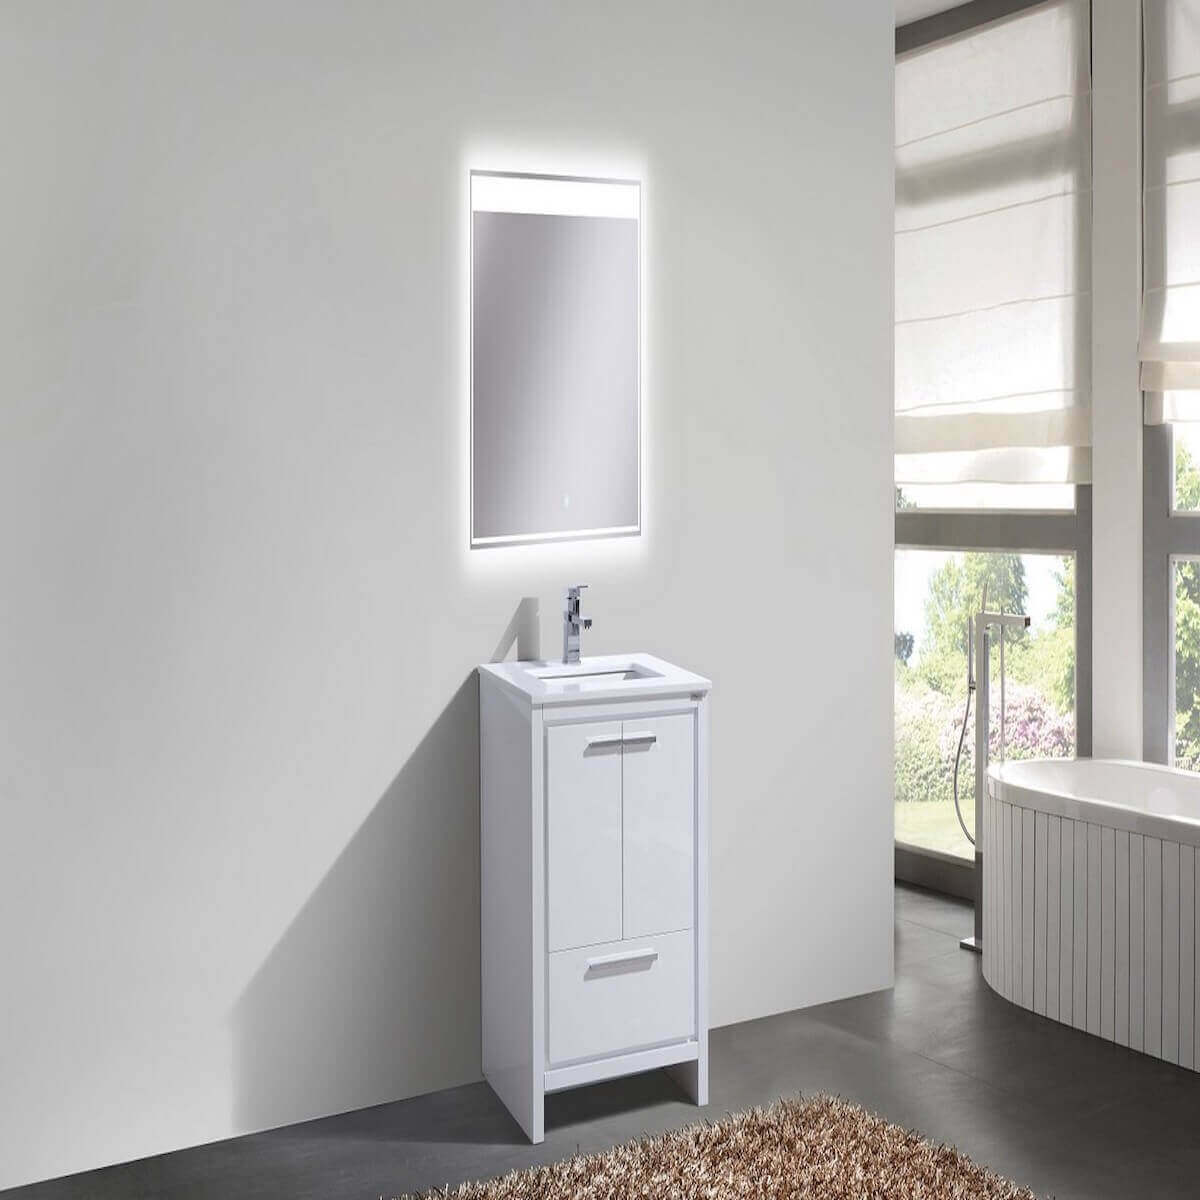 KubeBath Dolce 24" Gloss White Freestanding Single Vanity with Quartz Countertop AD624GW in Bathroom #finish_high gloss white